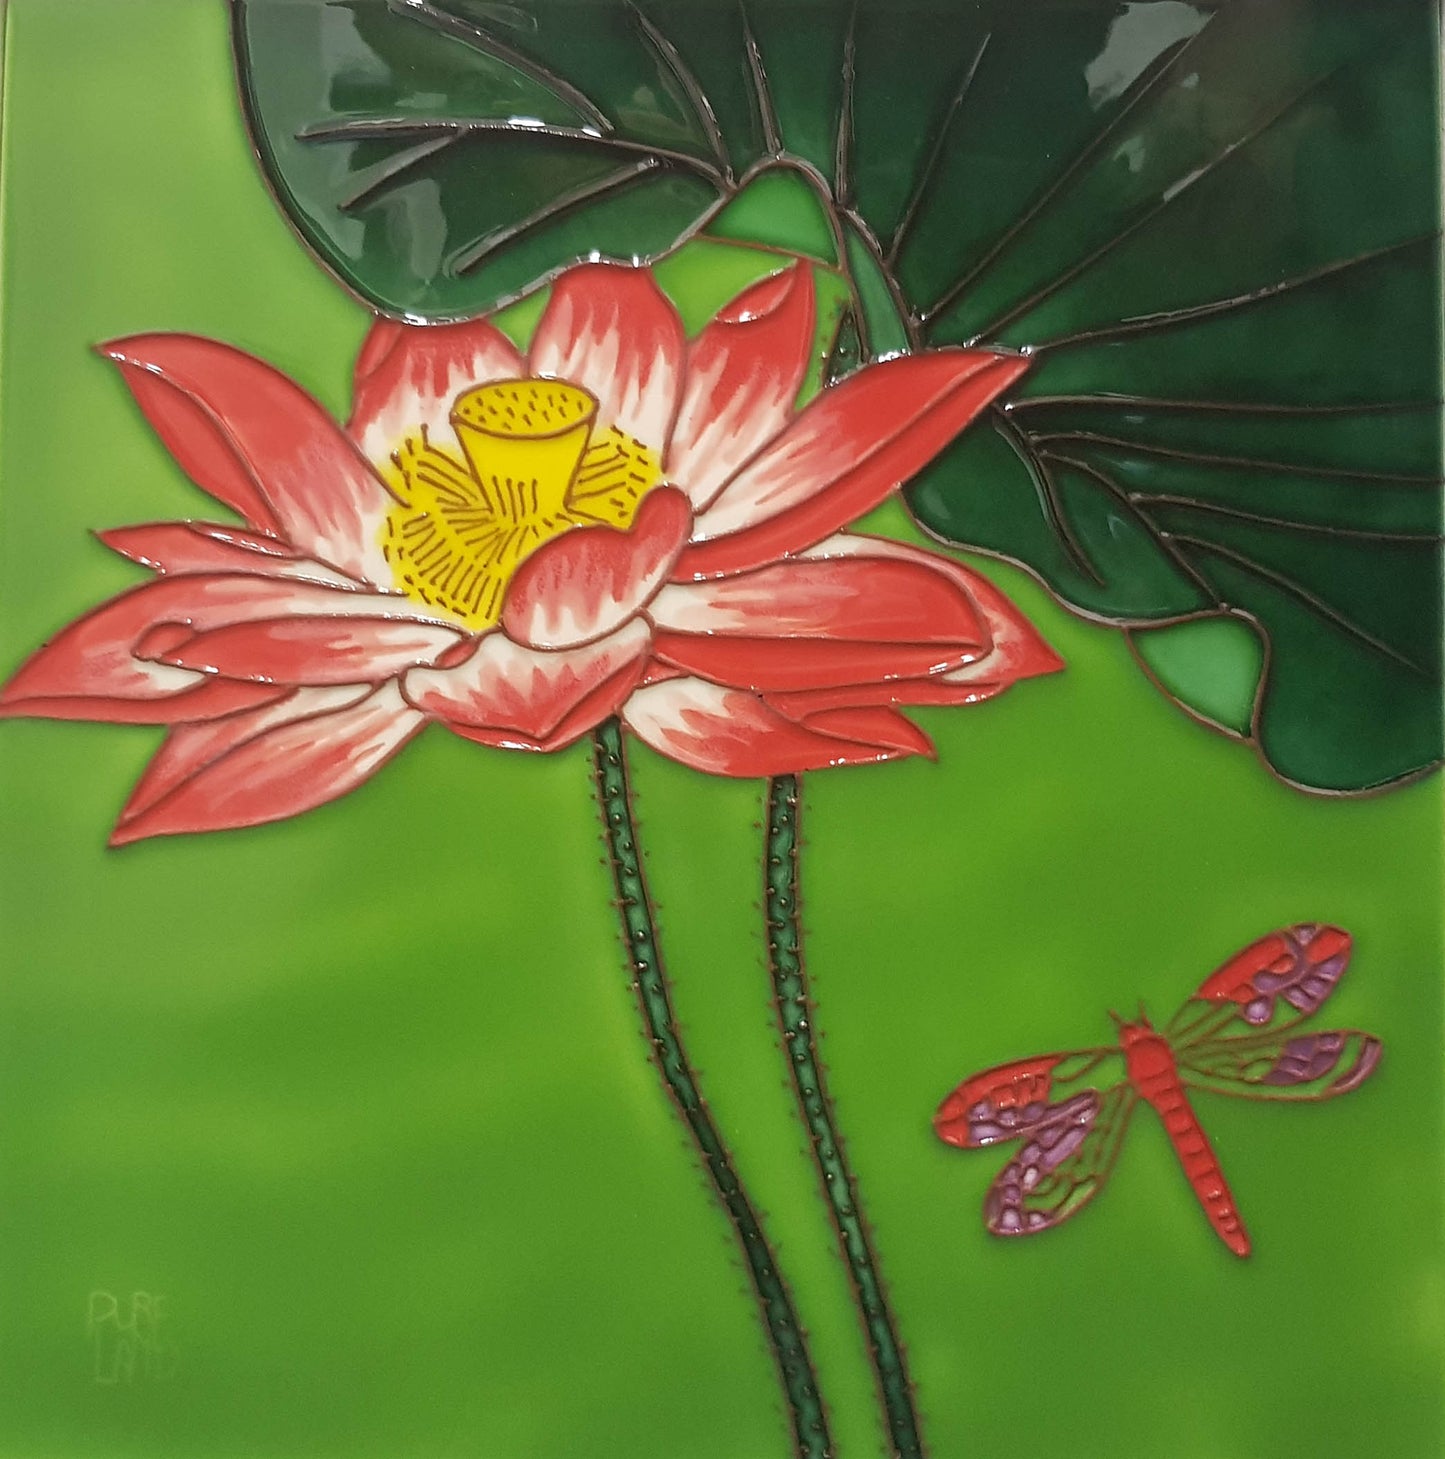 3522 Lotus Flower with Dragonfly Bottom Right 30cm x 30cm Pureland Ceramic Tile